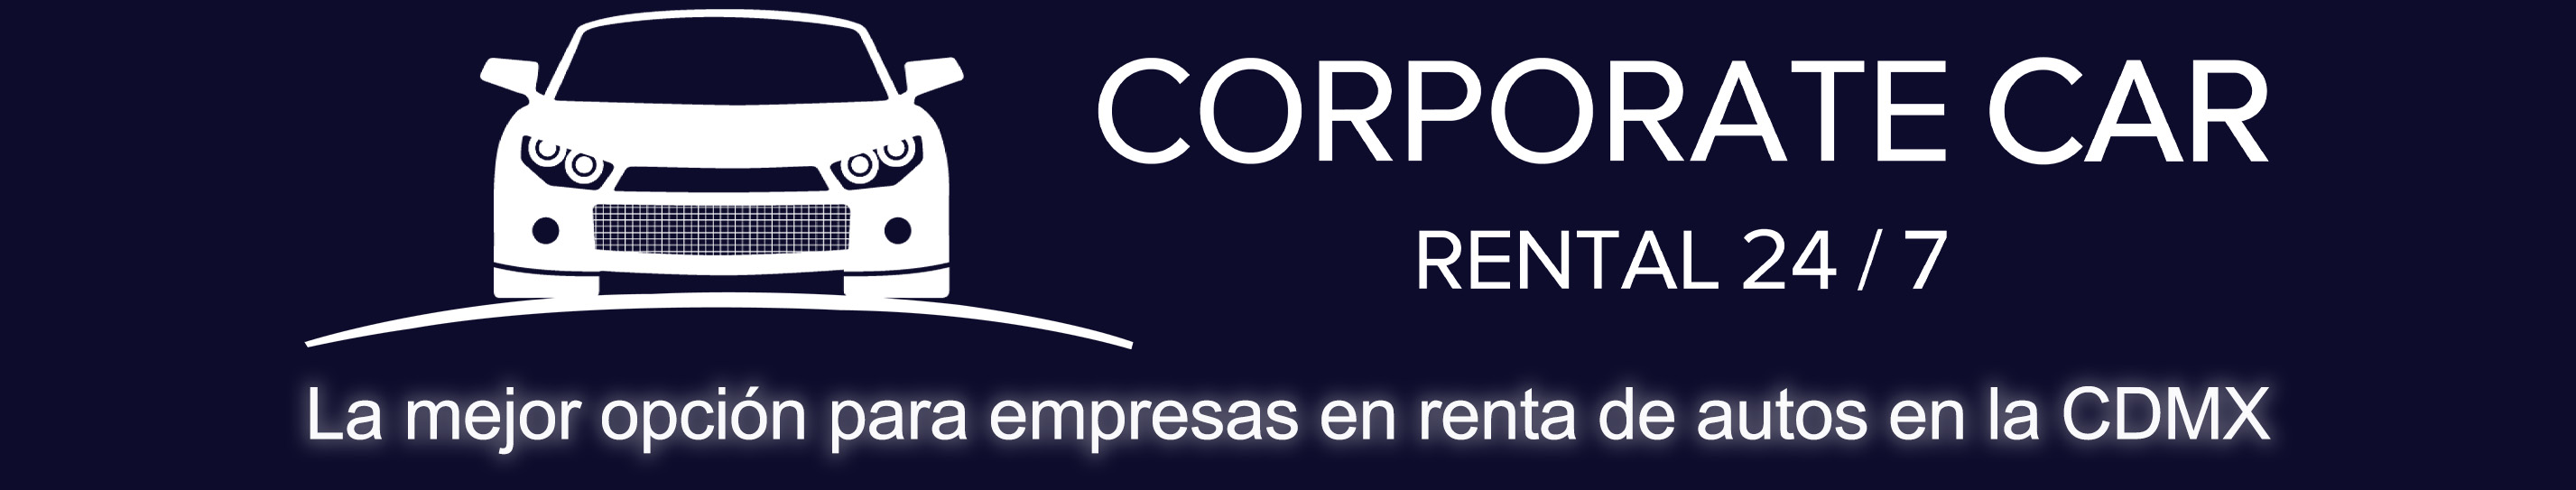 corporate_car_renta_tarifas_corporativas